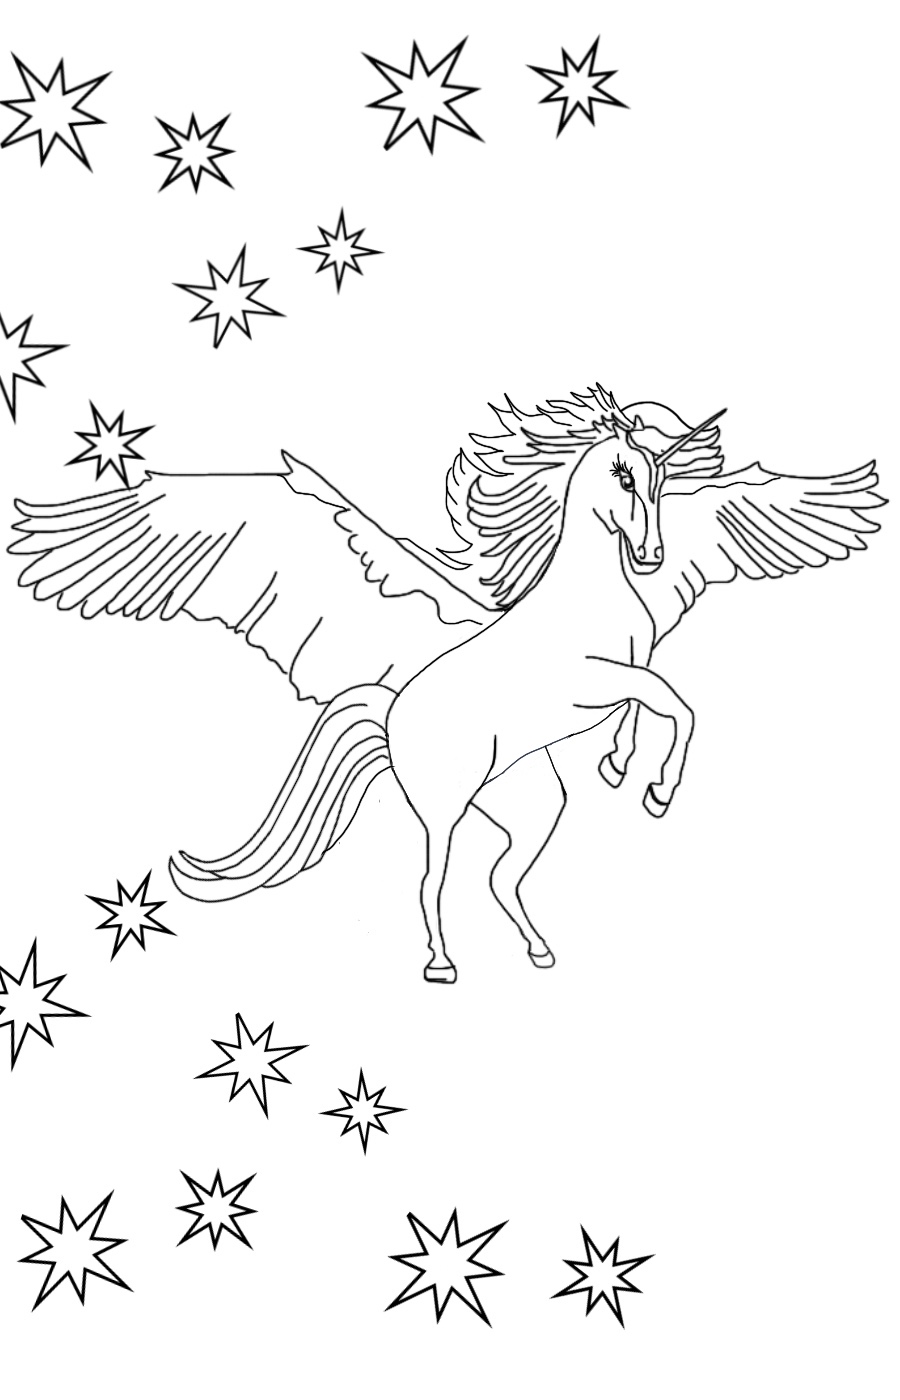 Pegasus Coloring Page Coloring Page. Itsostylish.com